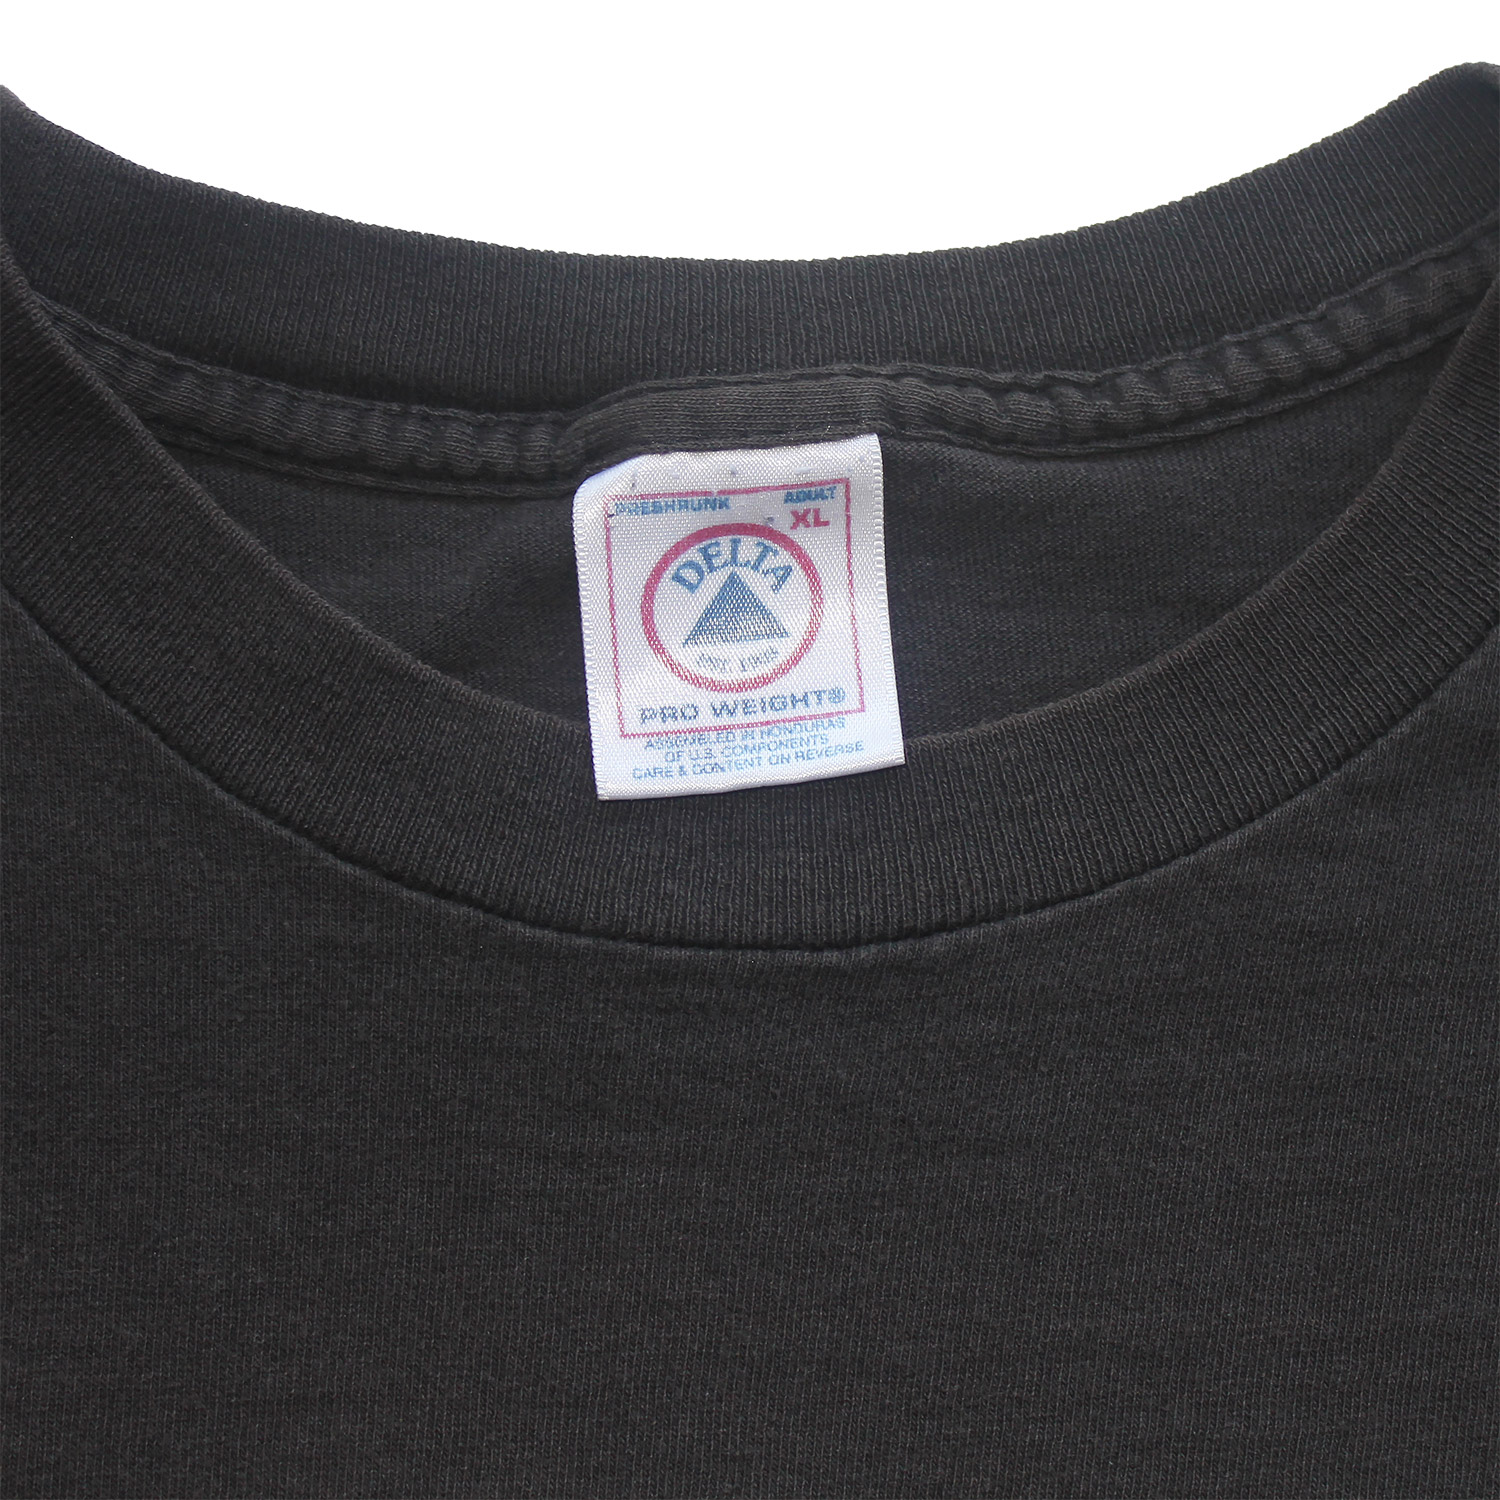 Vintage Slipknot T-shirt | Black Shirts World